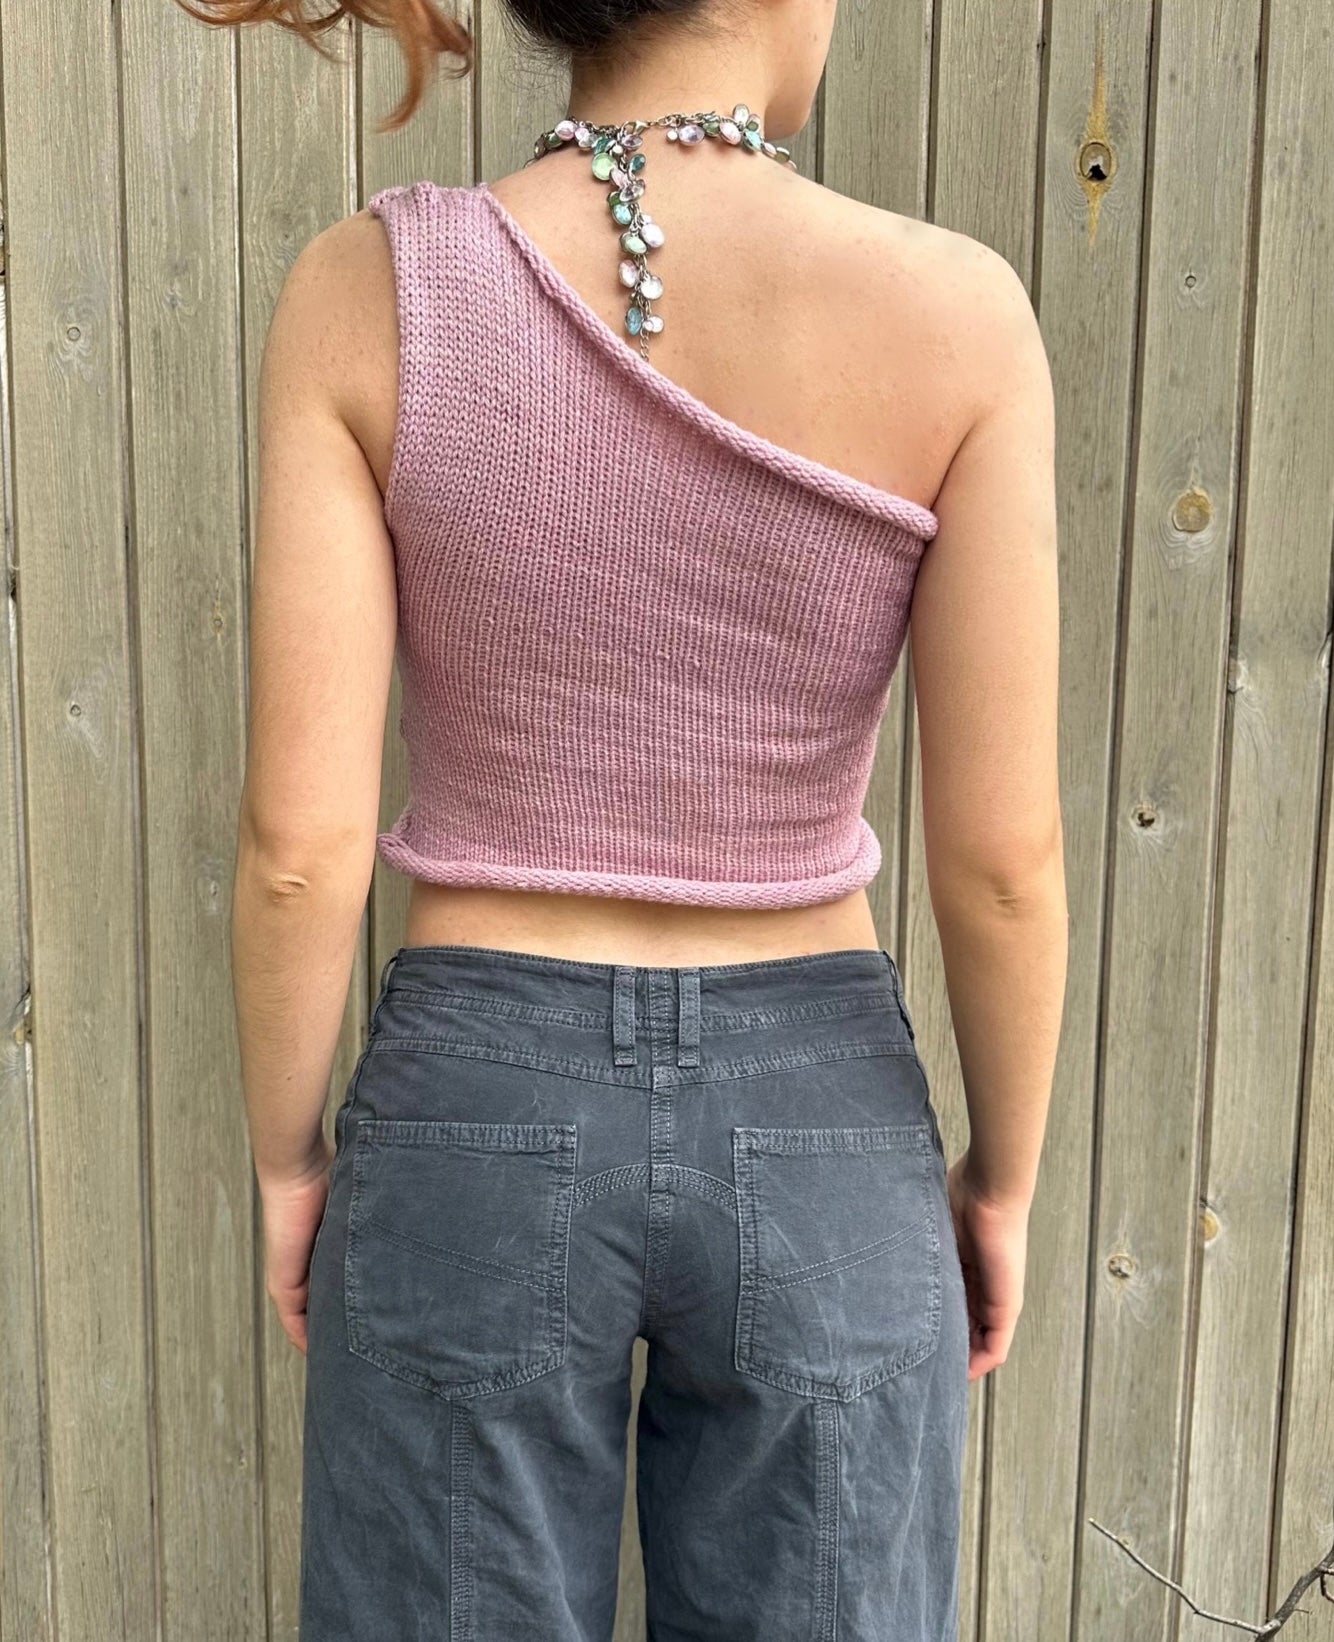 Handmade knitted dusky pink asymmetrical one shoulder top